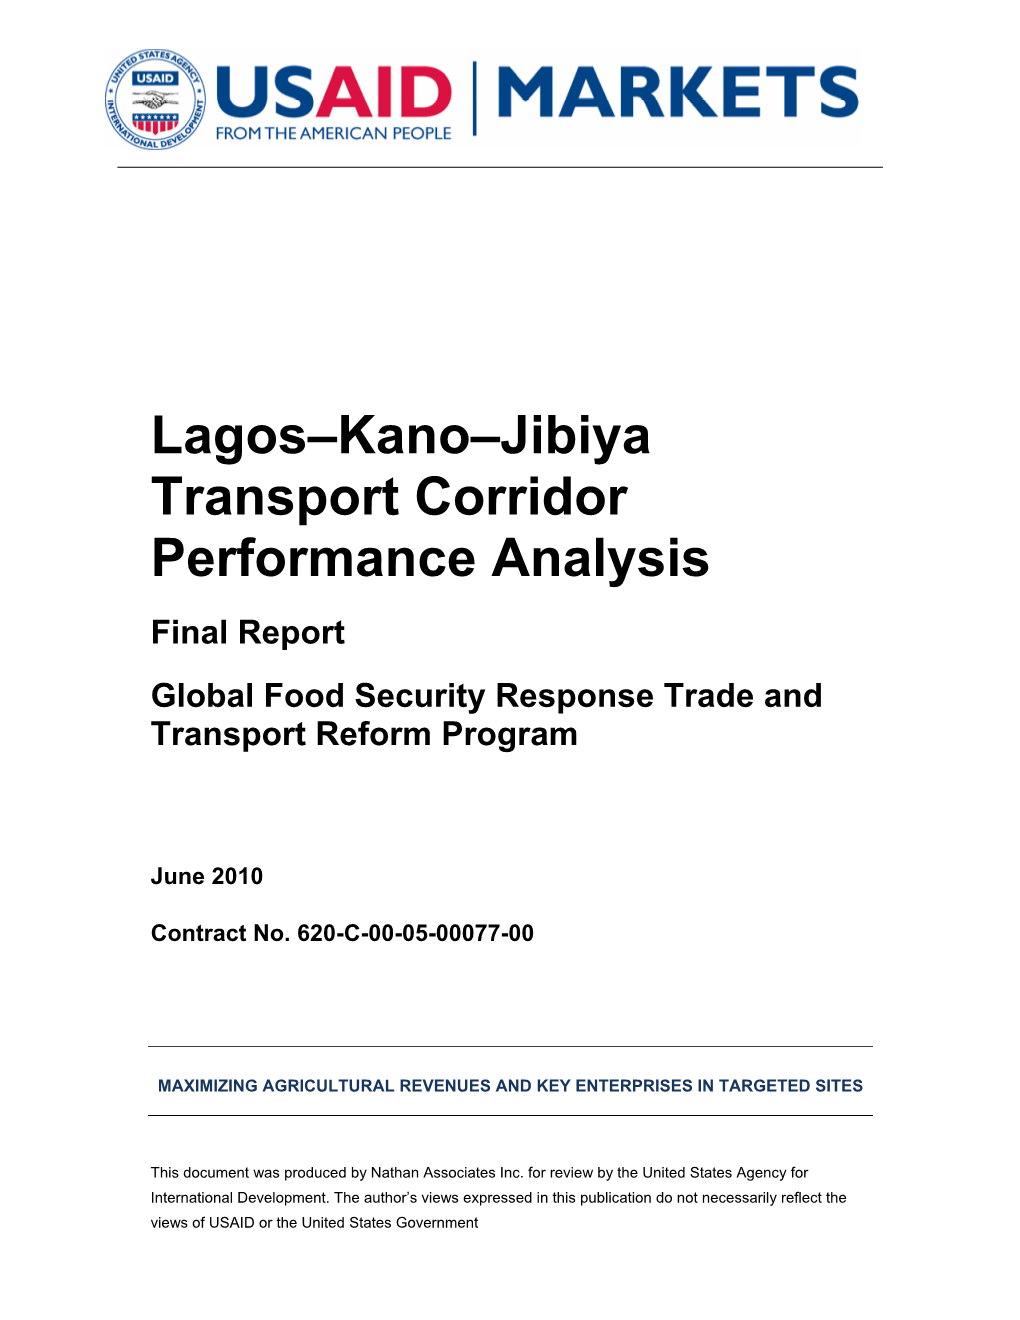 Lagos–Kano–Jibiya Transport Corridor Performance Analysis Final Report Global Food Security Response Trade and Transport Reform Program